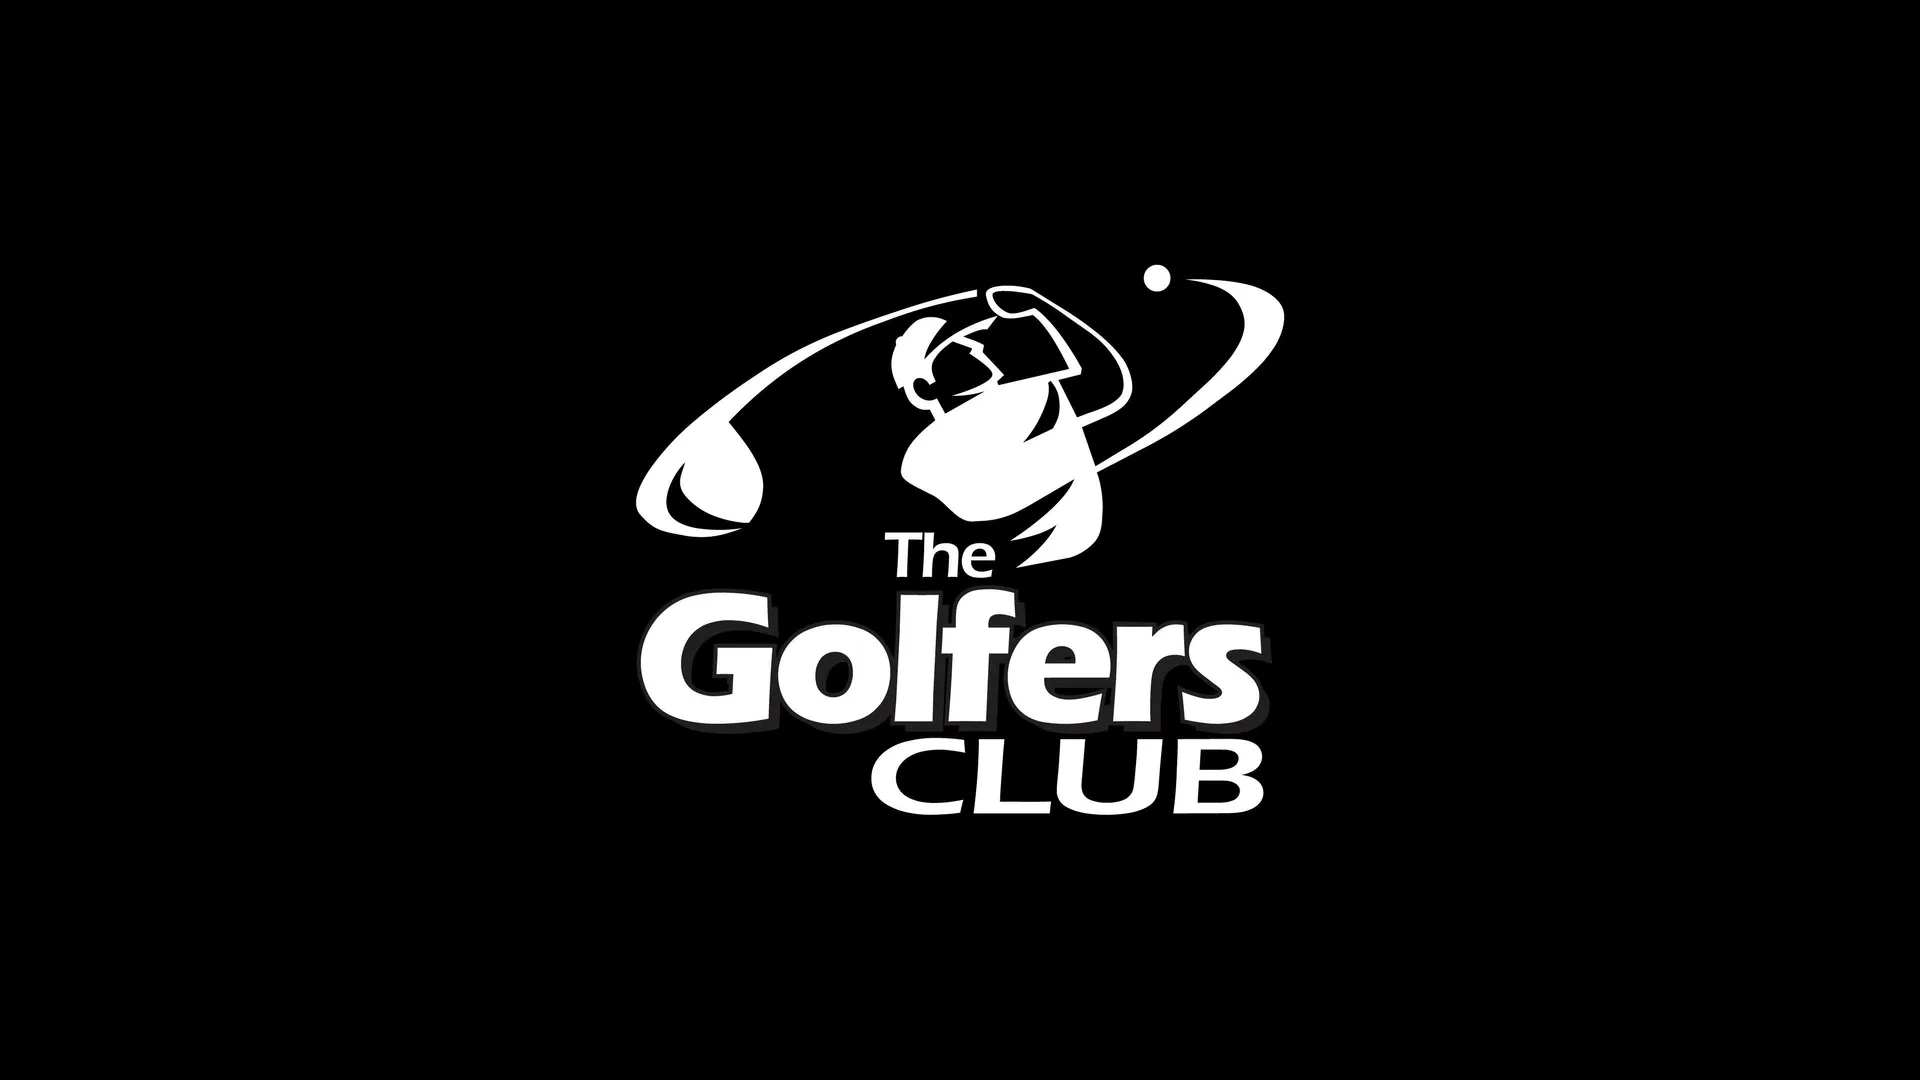 THE GOLFERS CLUB logo. Current catalogue